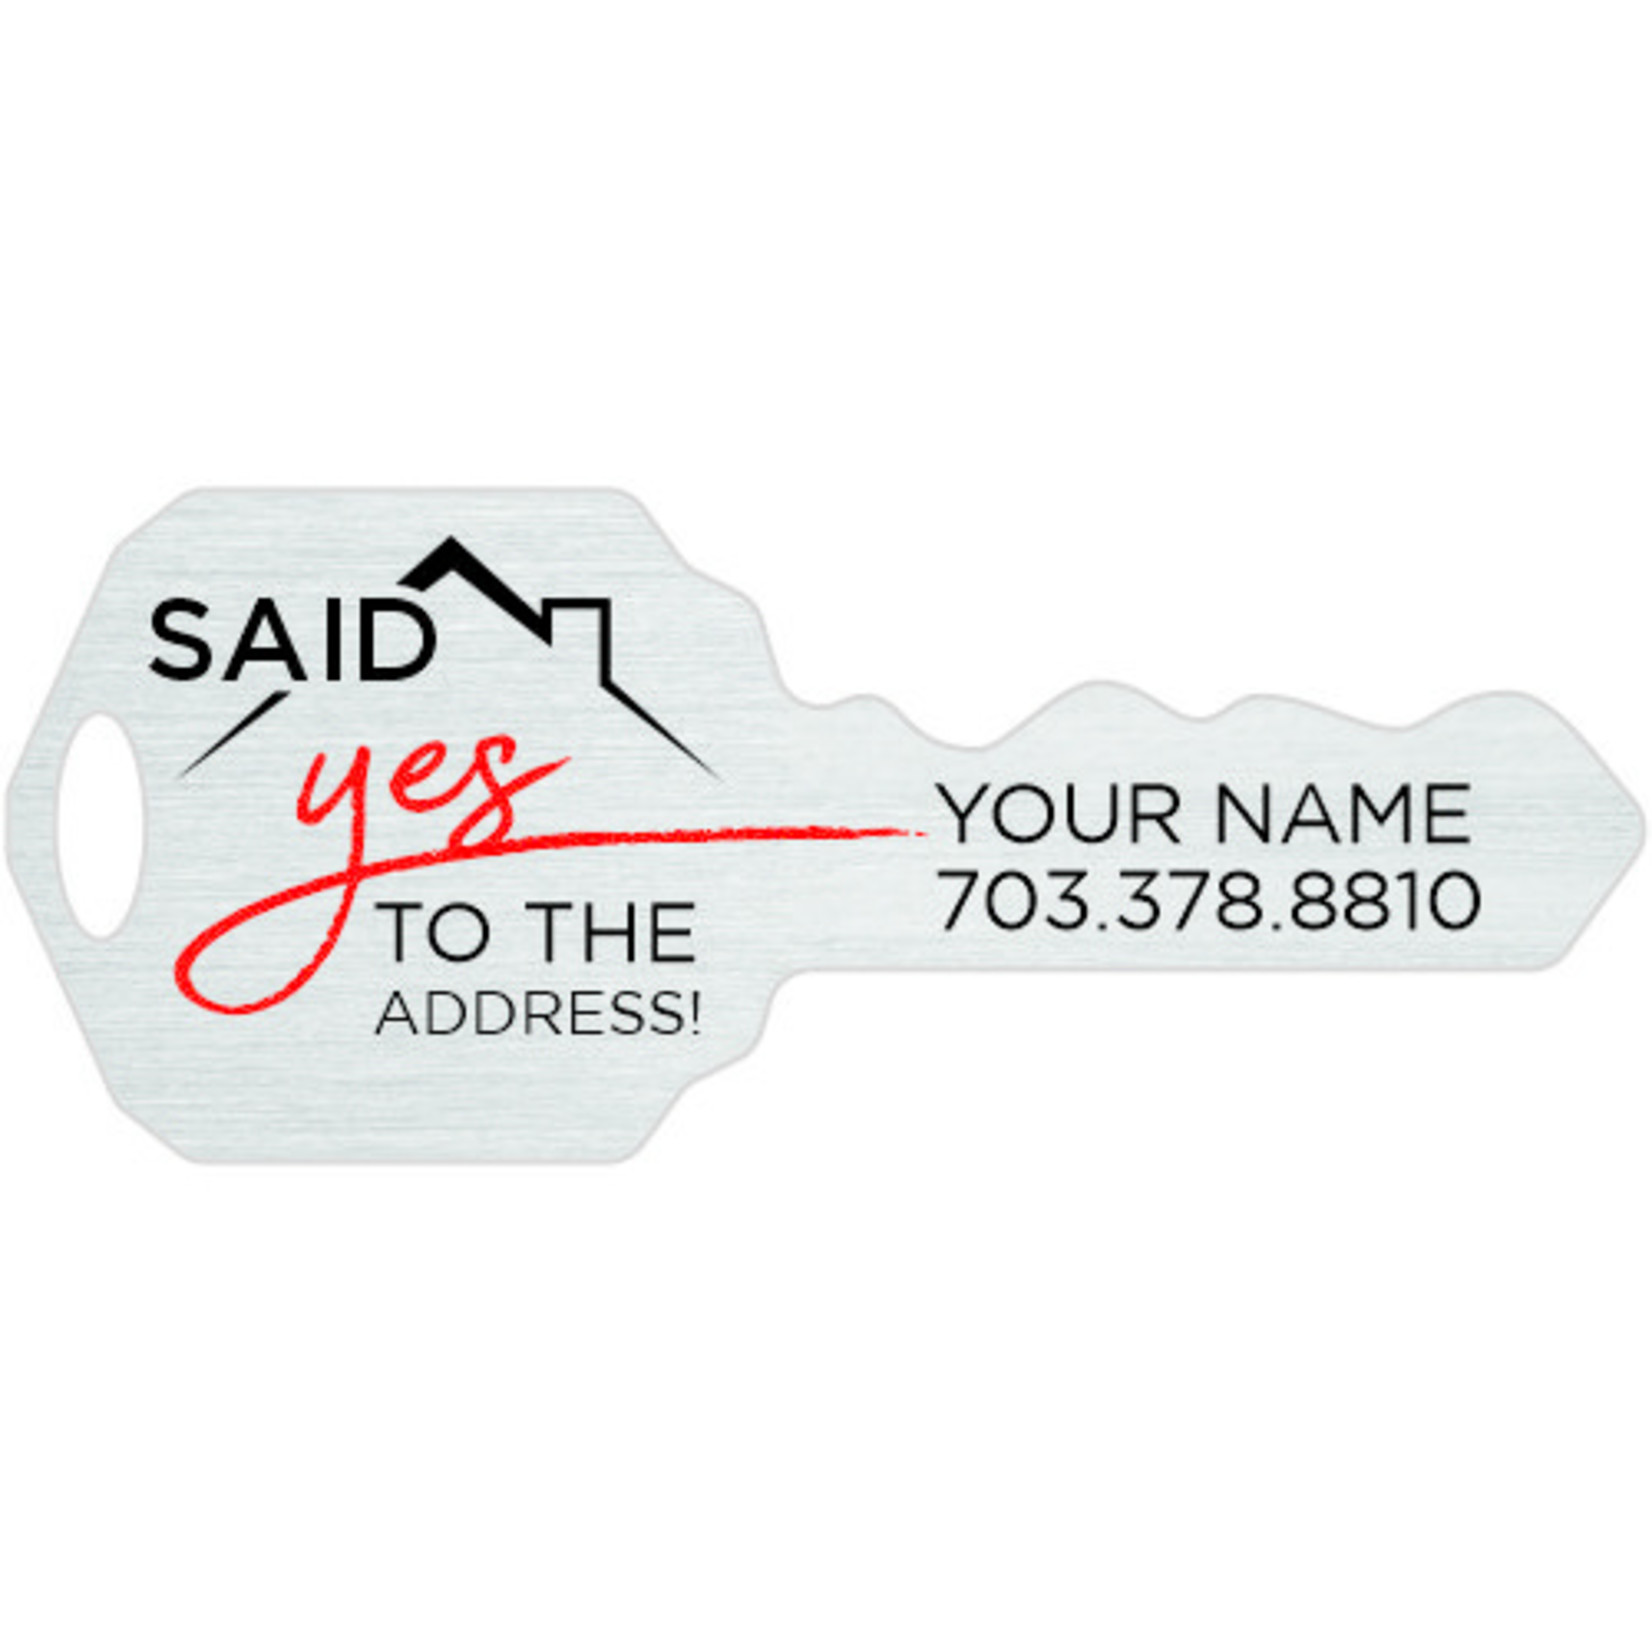 Said Yes to the Address - PVC Key